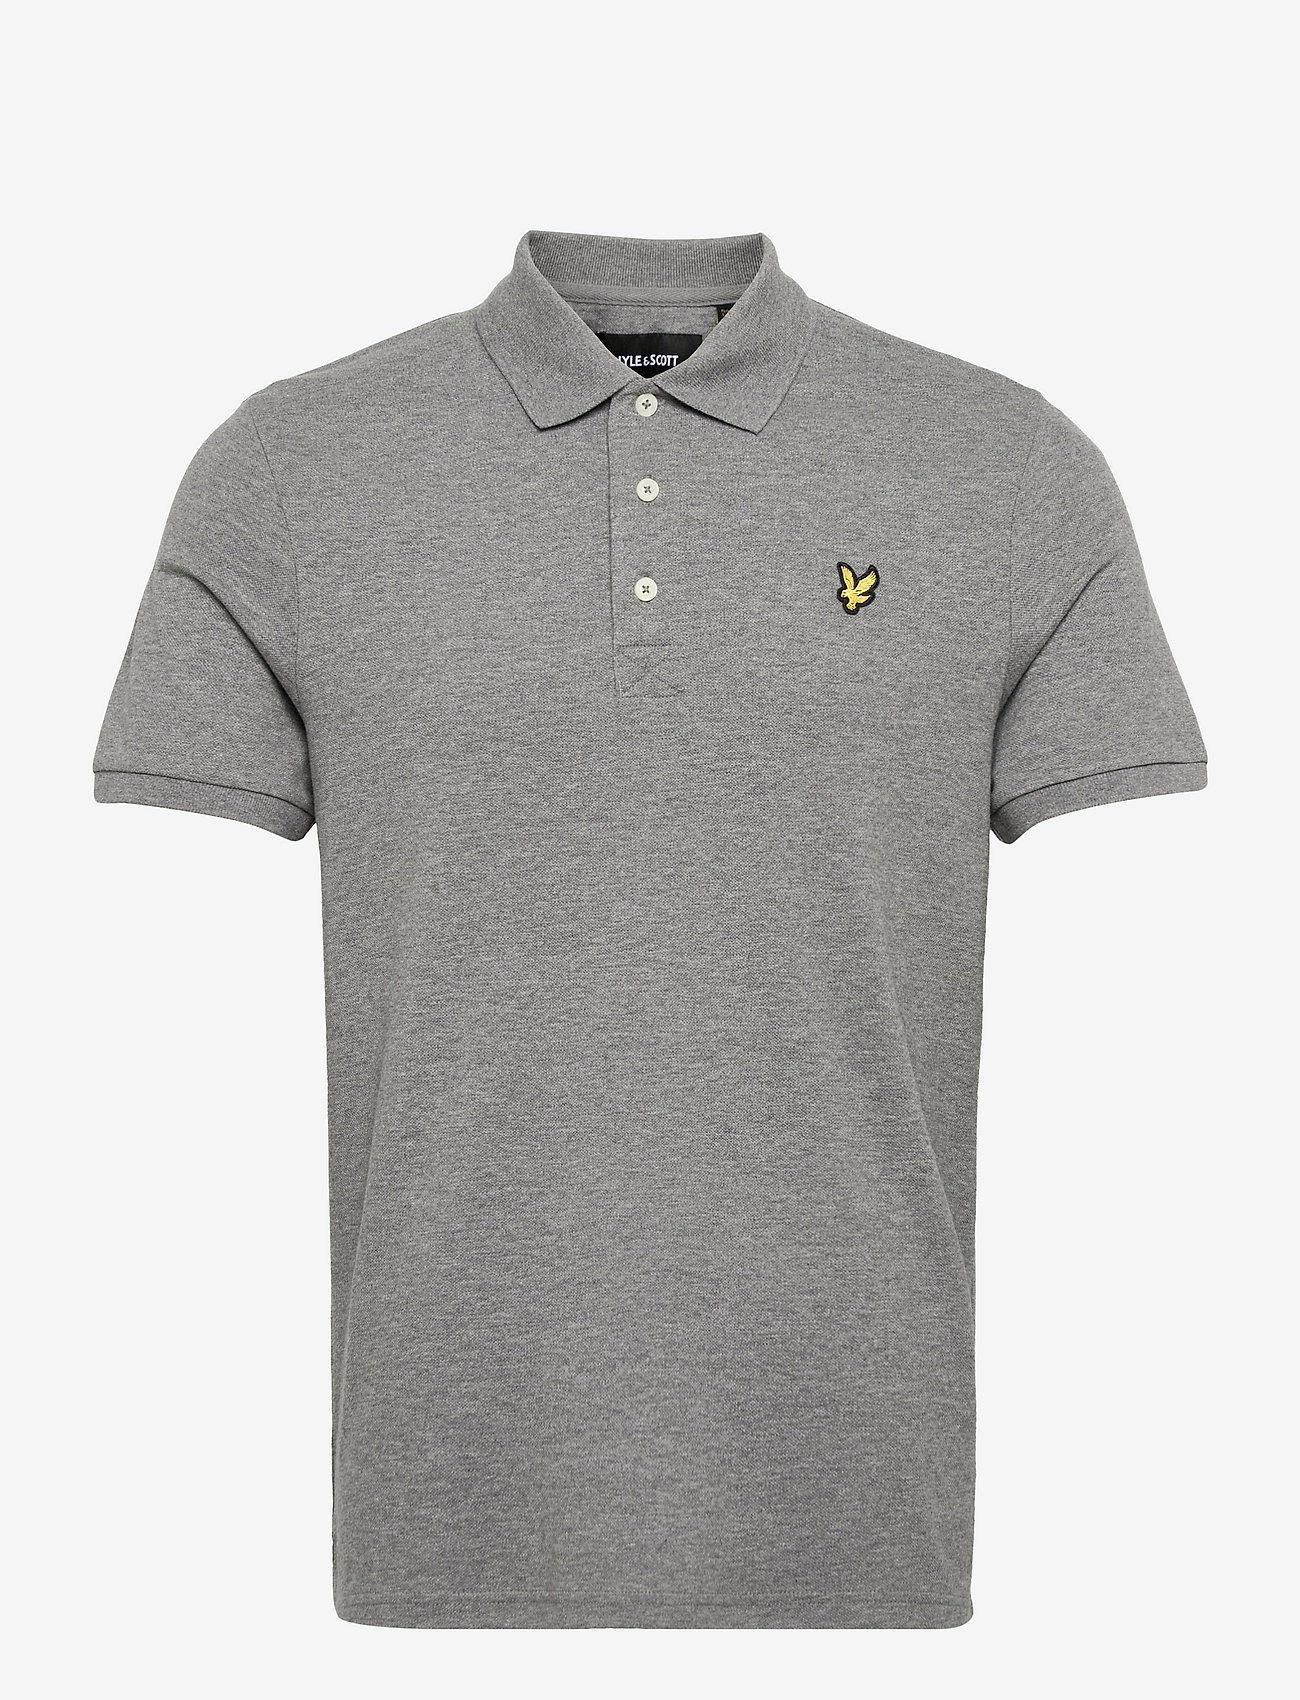 Lyle & Scott - Plain Polo Shirt - korte mouwen - mid grey marl - 0